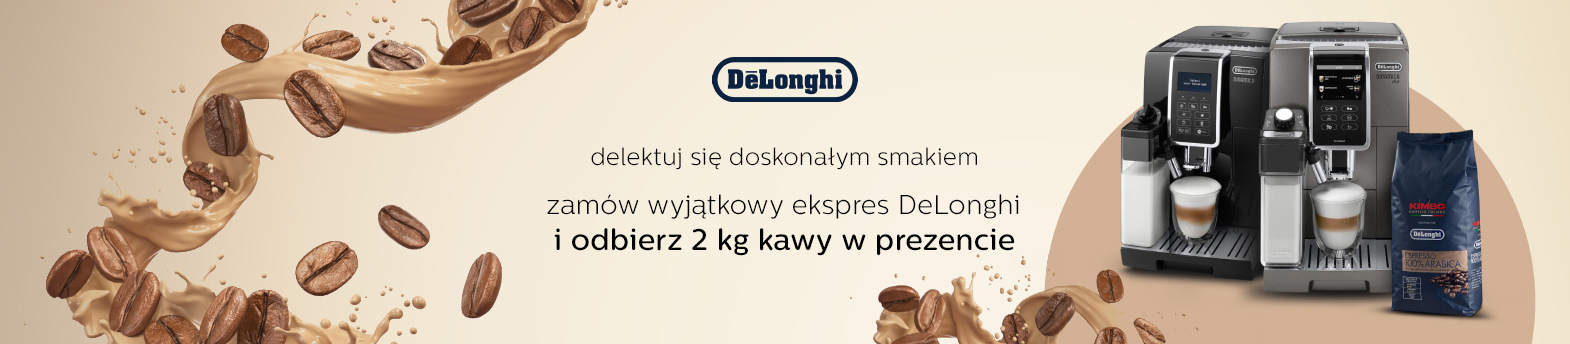 DeLonghi - kawa w prezencie